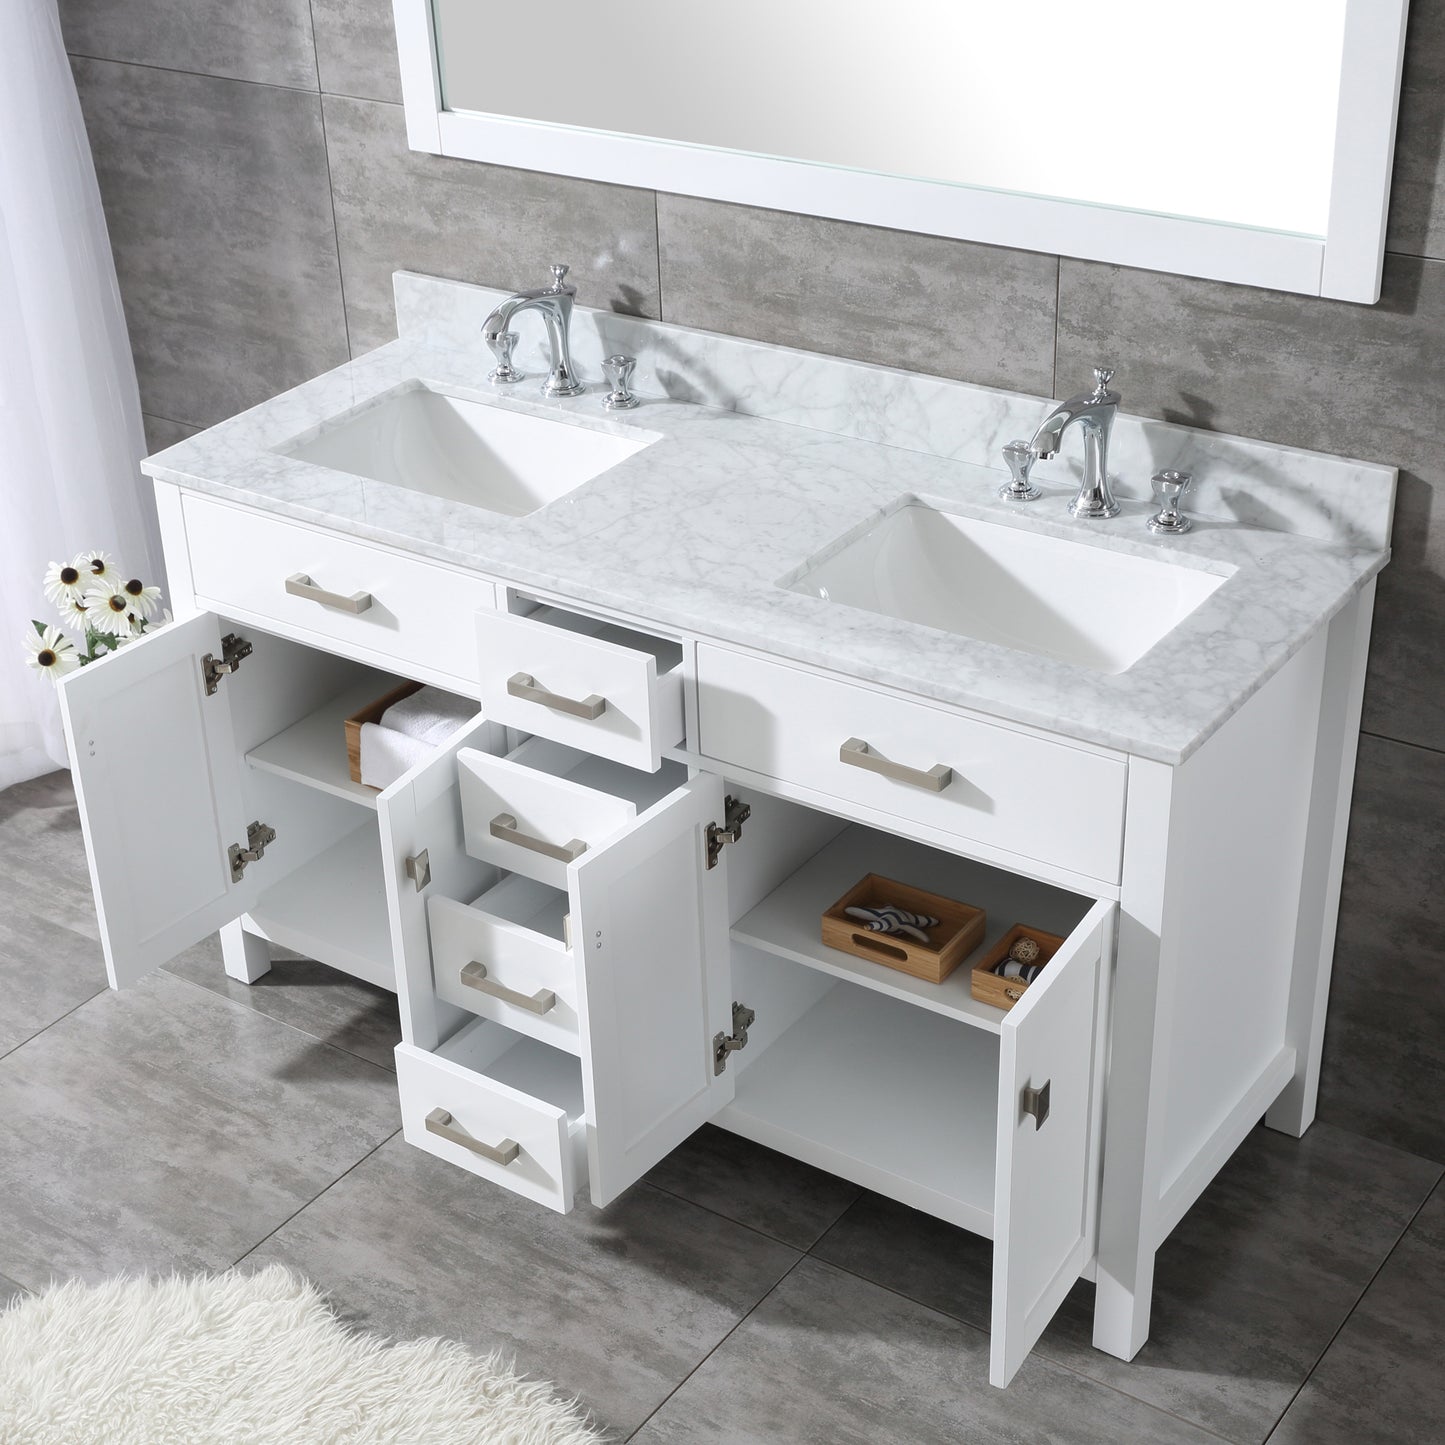 60" White Vanity w/ Marble Countertop, Backsplash & Mirror